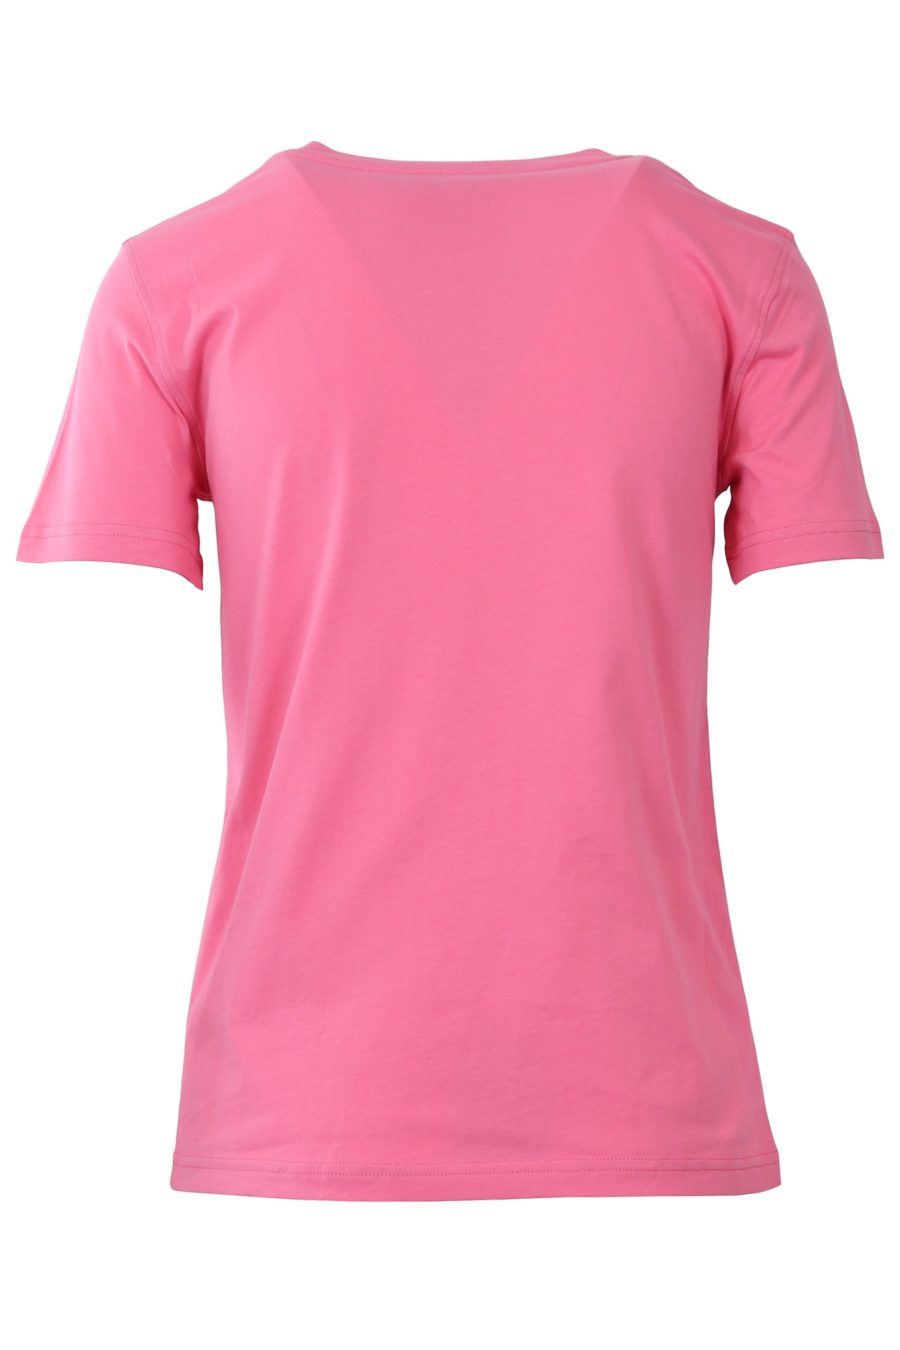 Camiseta Moschino Couture rosa con logo grande milano - 3b895d682028876c904850f7ec6f3b26d00d3154